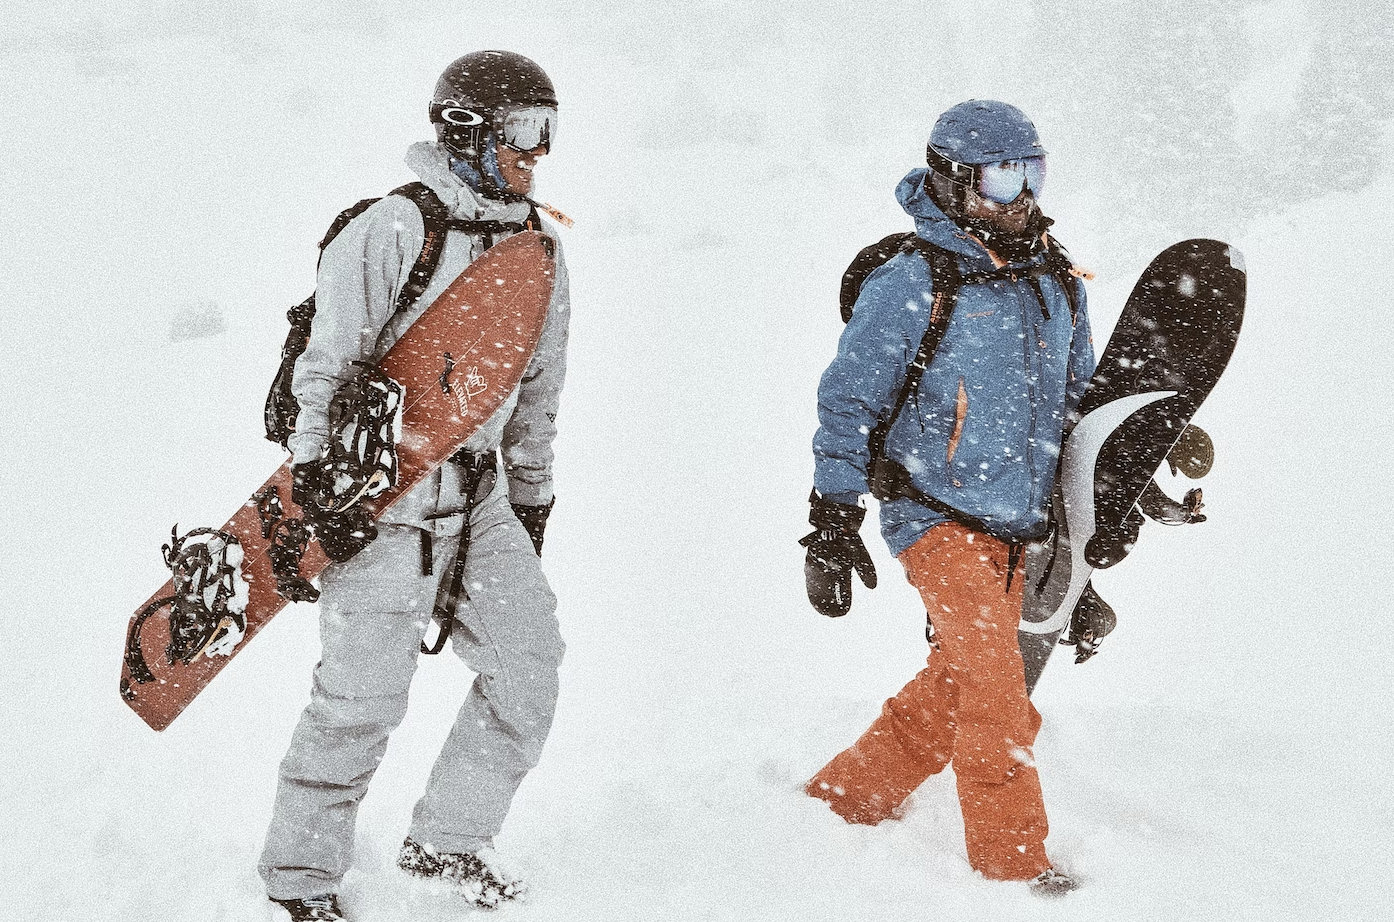 Jorge Abian and Tim Weers walking in deep snow in Kyrgyzstan with their snowboards